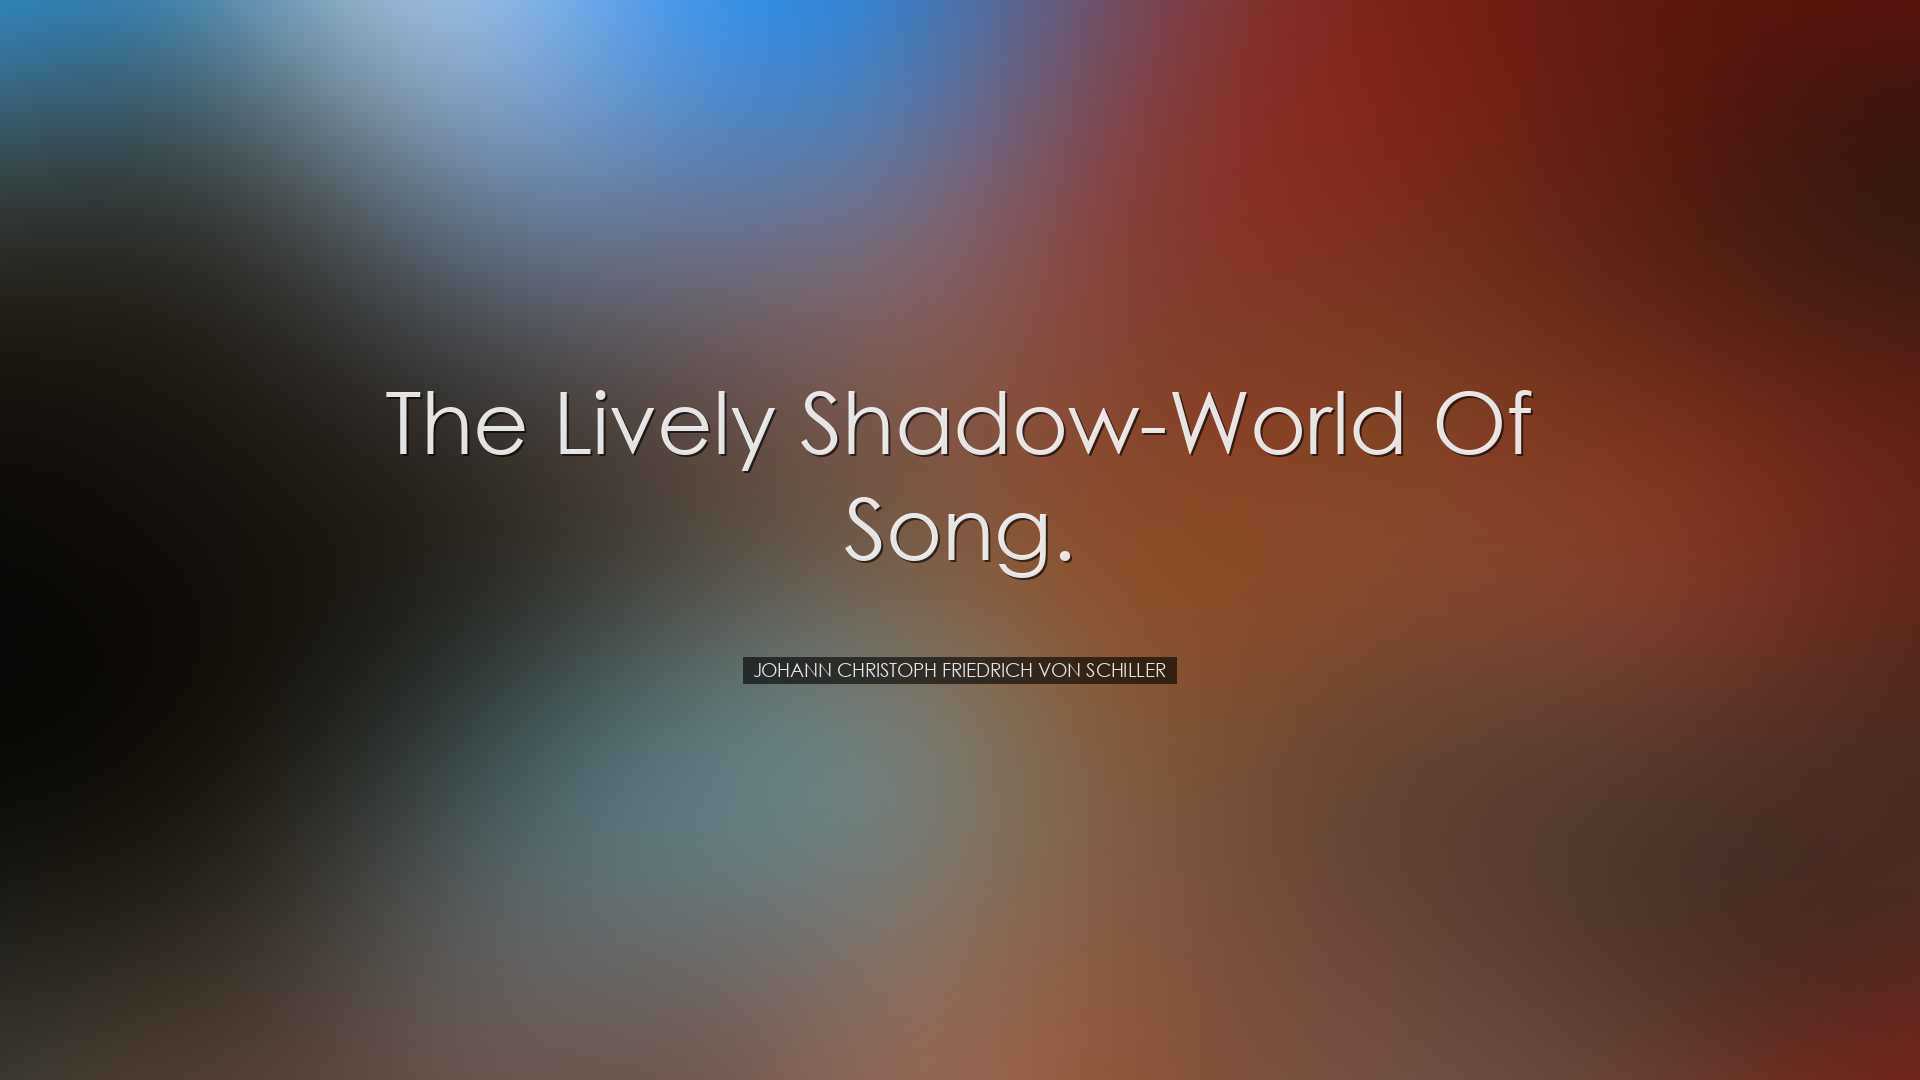 The lively Shadow-World of Song. - Johann Christoph Friedrich von